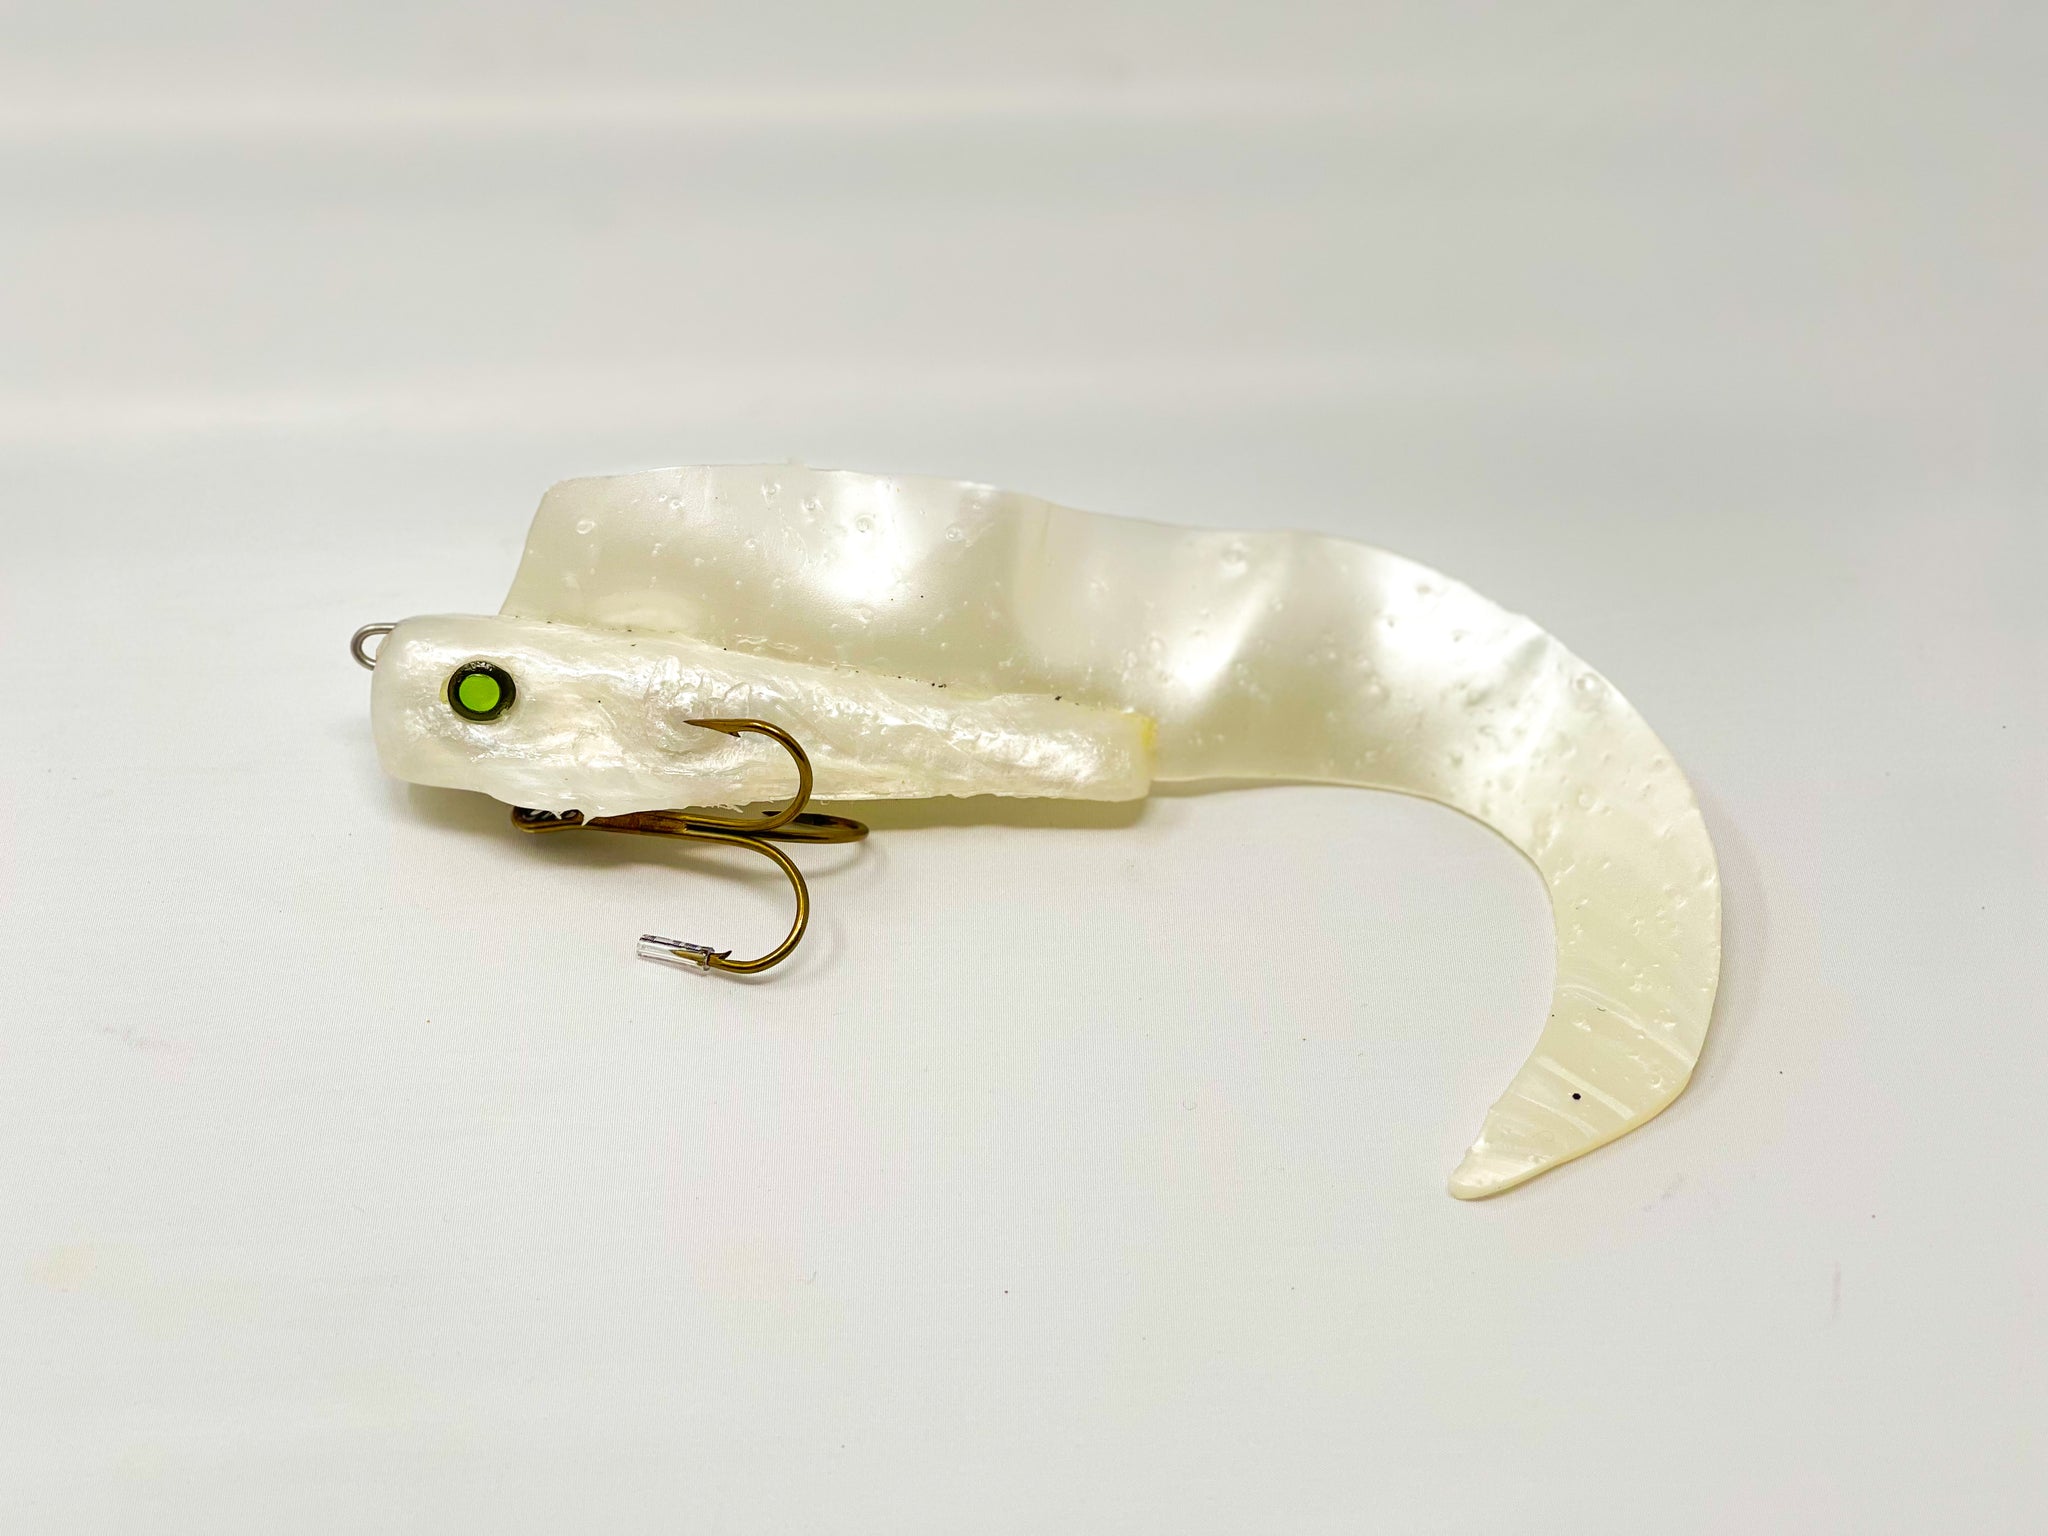 DB Lizard - Diesel Baits customer designed soft plastic fishing lures